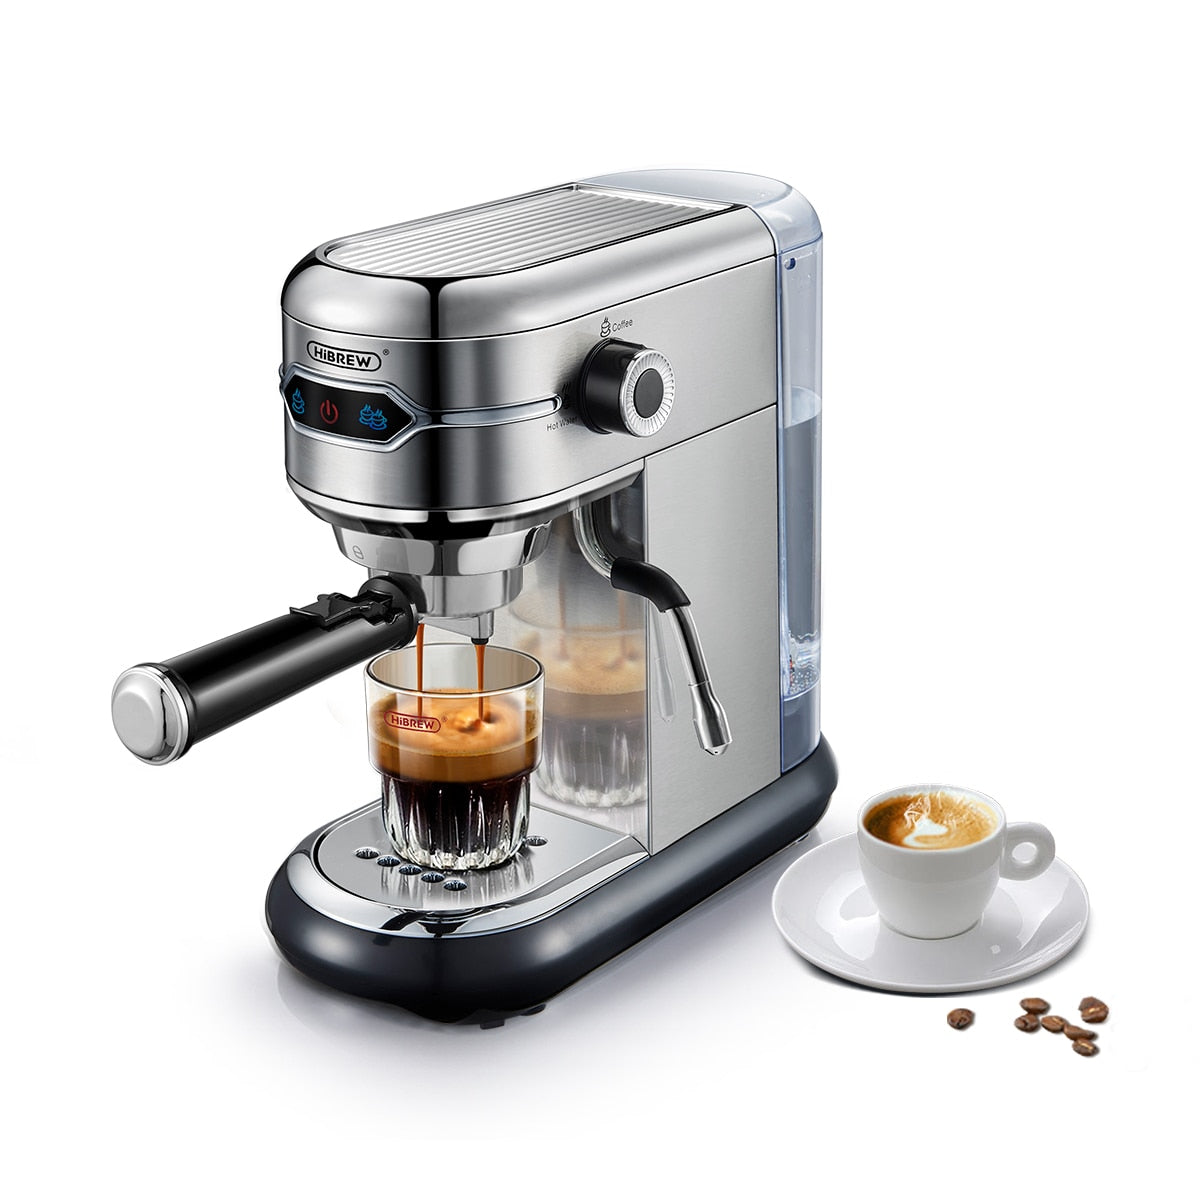  Hibrew machine Espresso H11